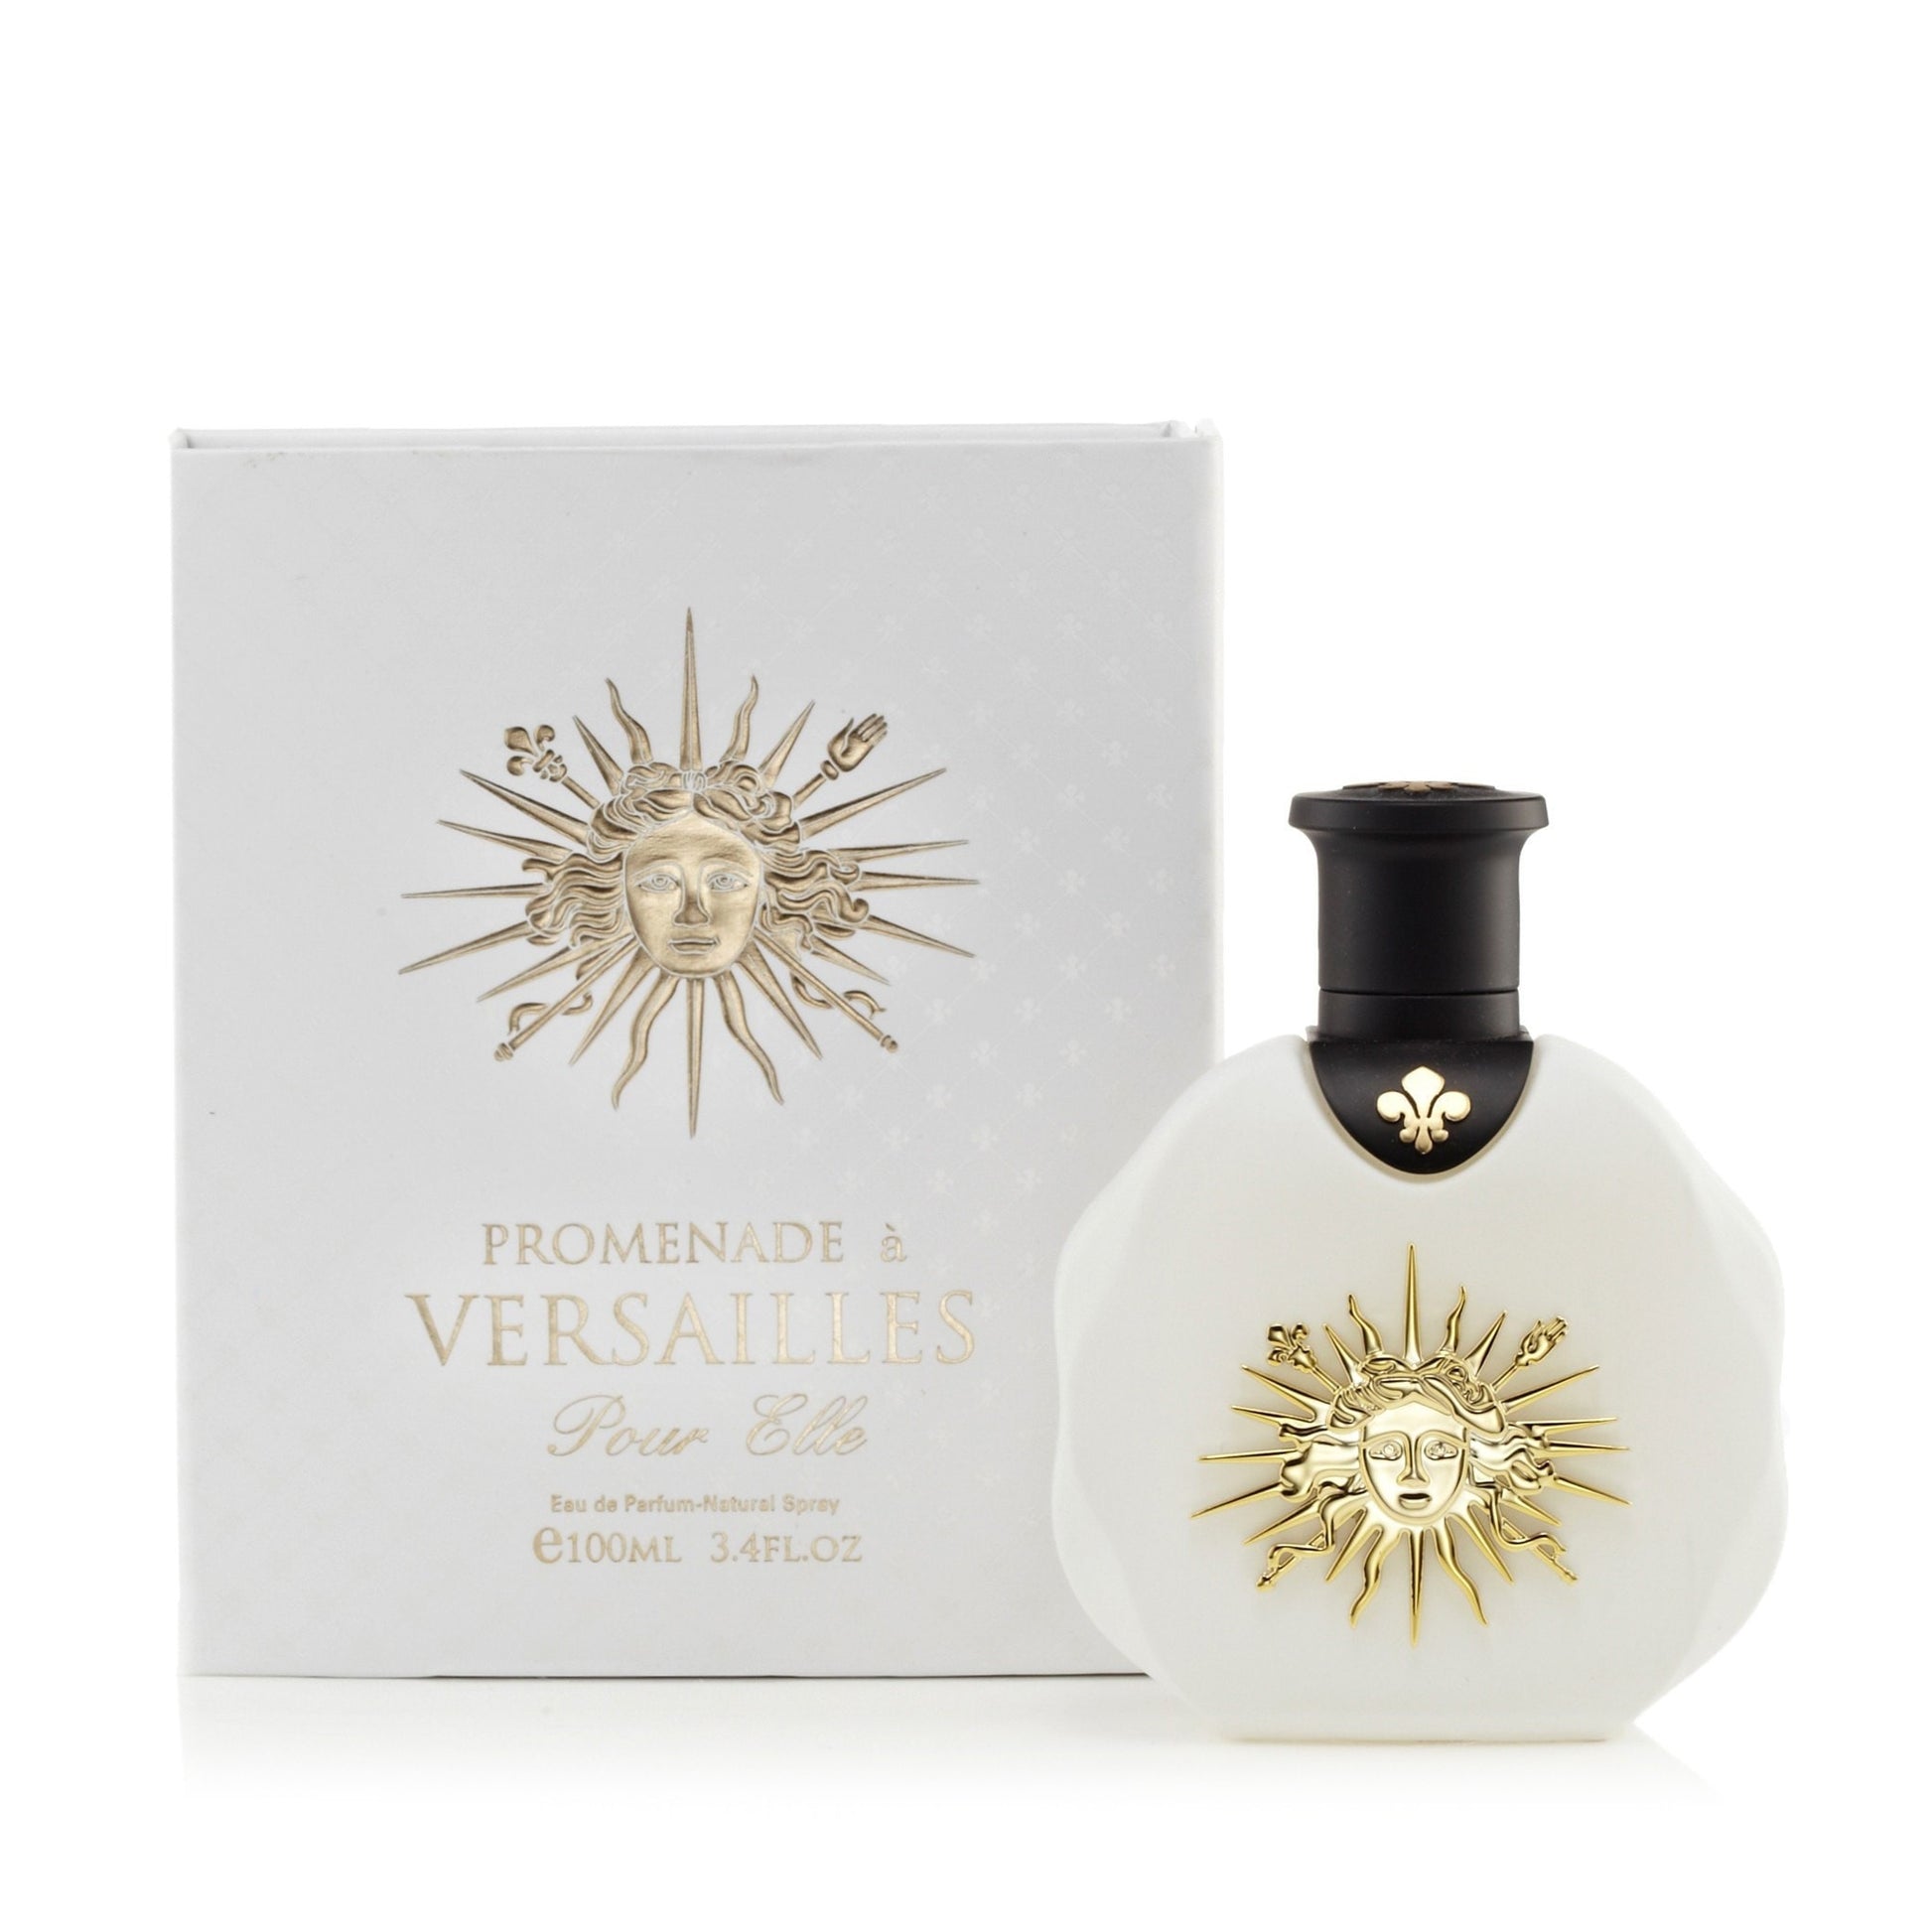 Promenade A Versailles Pour Elle Eau de Parfum Womens Spray 3.4 oz. Click to open in modal